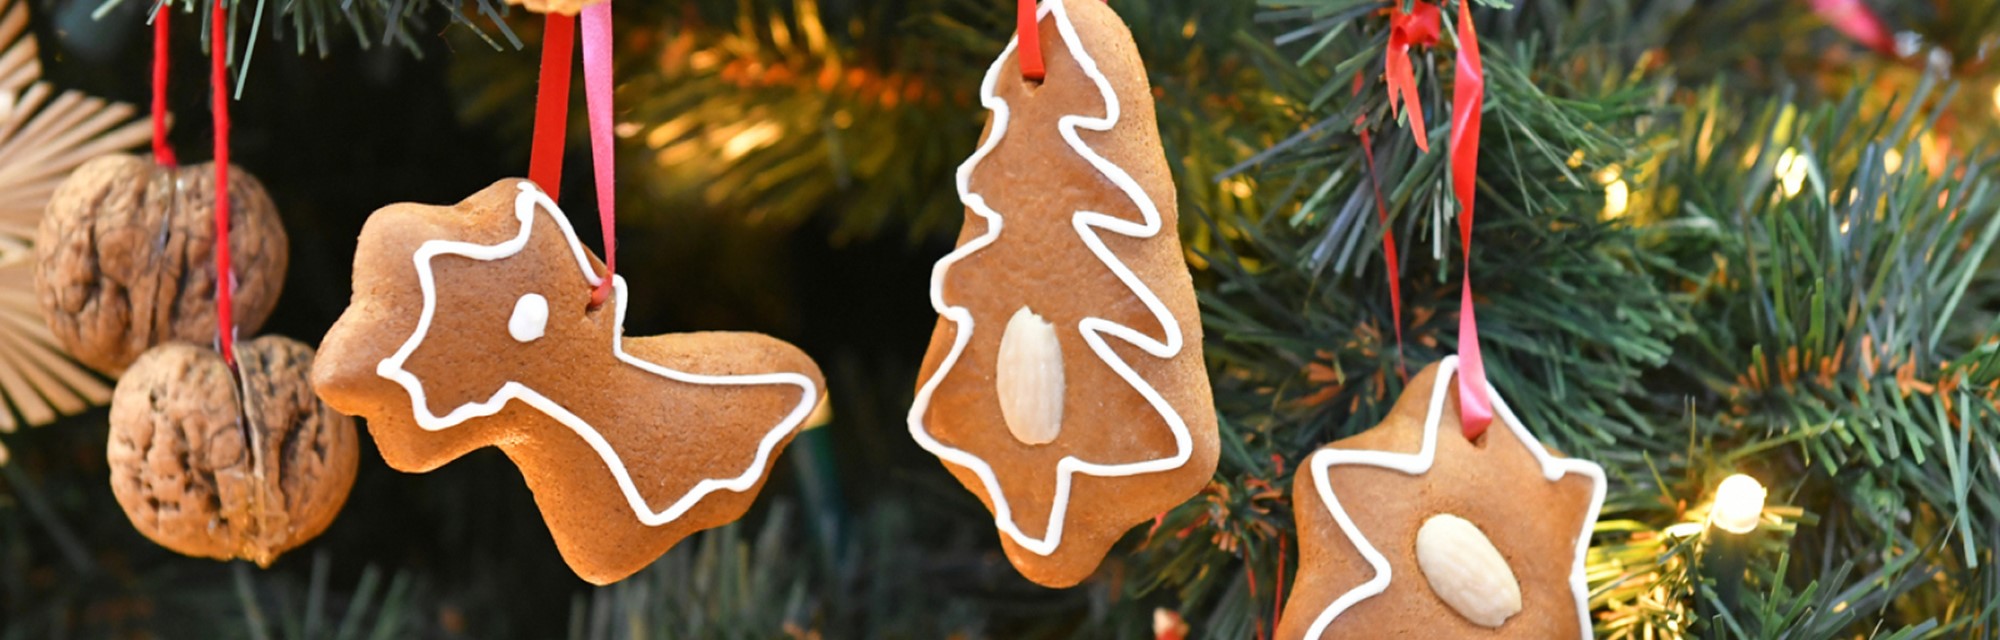 Gingerbread biscuits Advent calendar